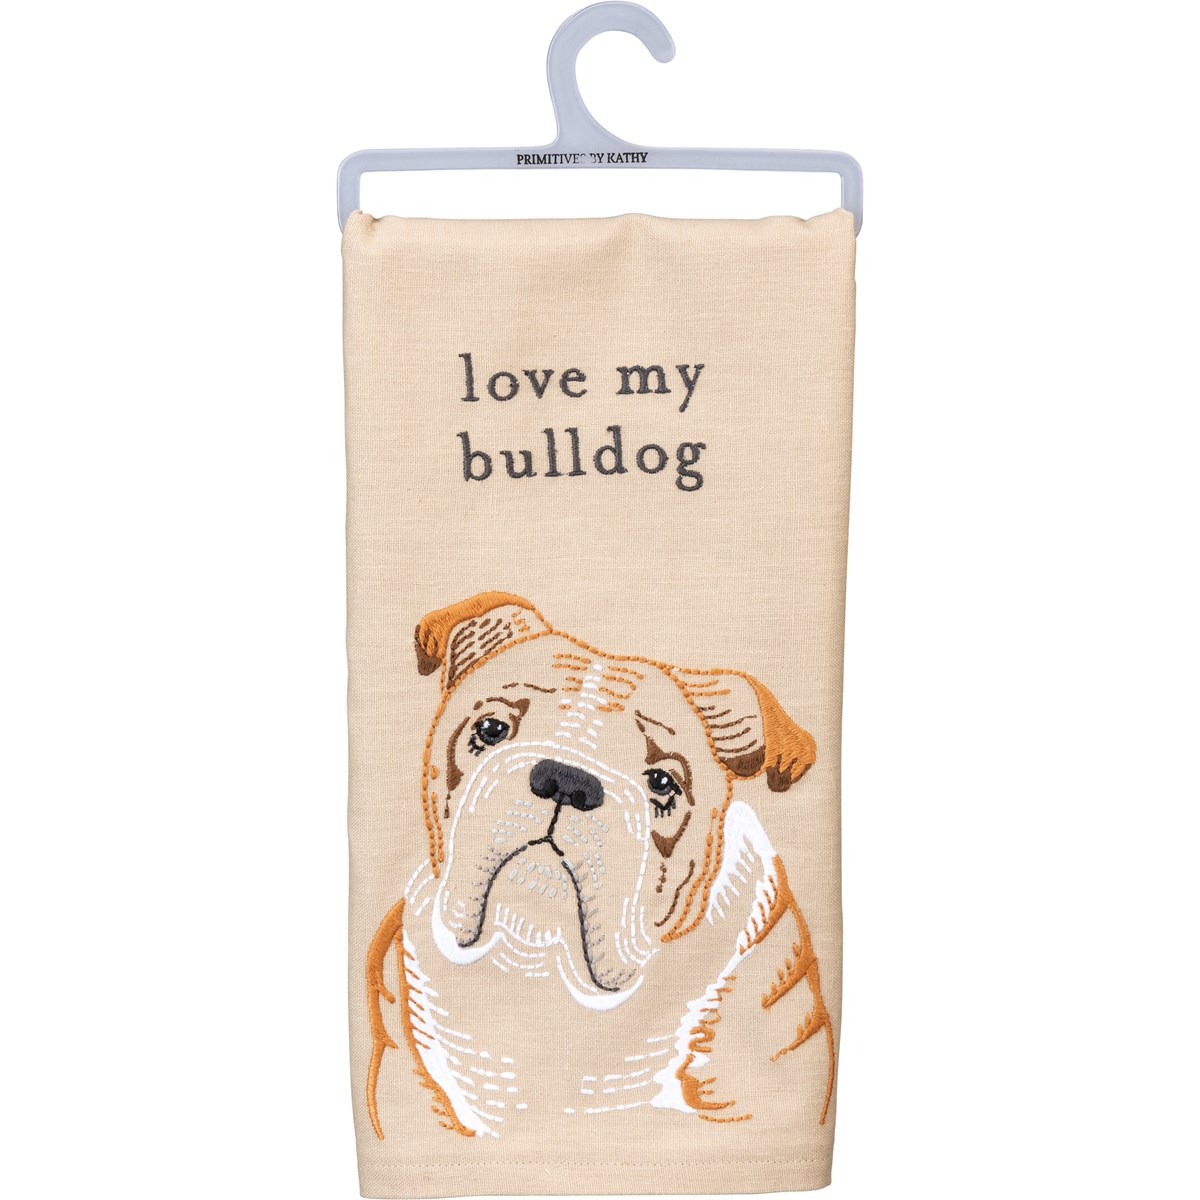 Kitchen Towel - Love My Bulldog  - 20" x 26"  - Cotton, Linen